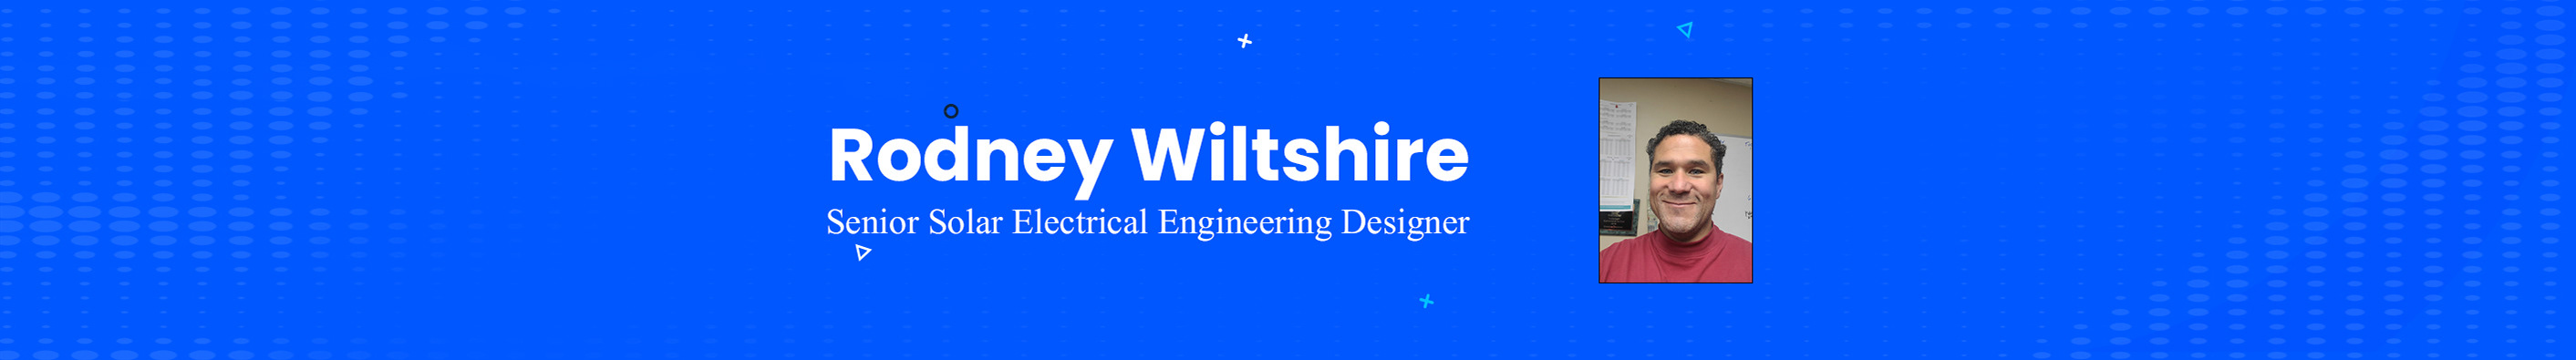 Rodney Wiltshire's profile banner